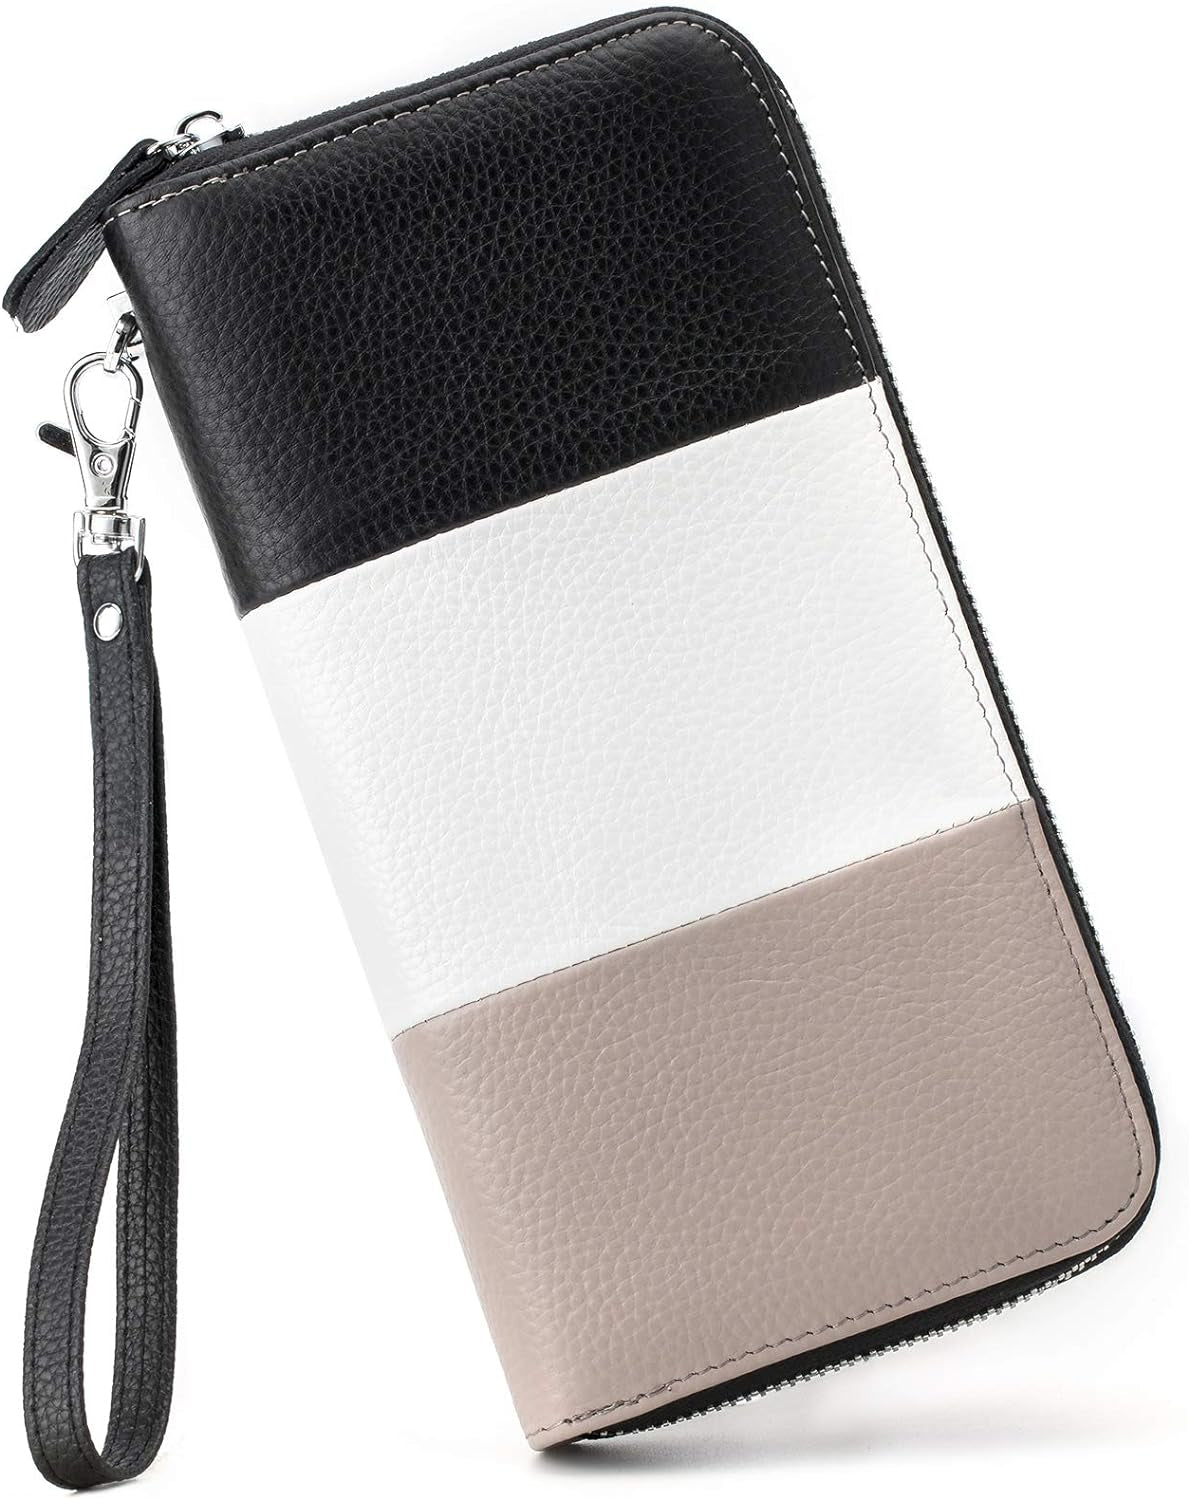 Womens Wallet RFID Blocking Genuine Leather Multi Credit Card Large Capacity Zip around Clutch Travel Purse Wristlet